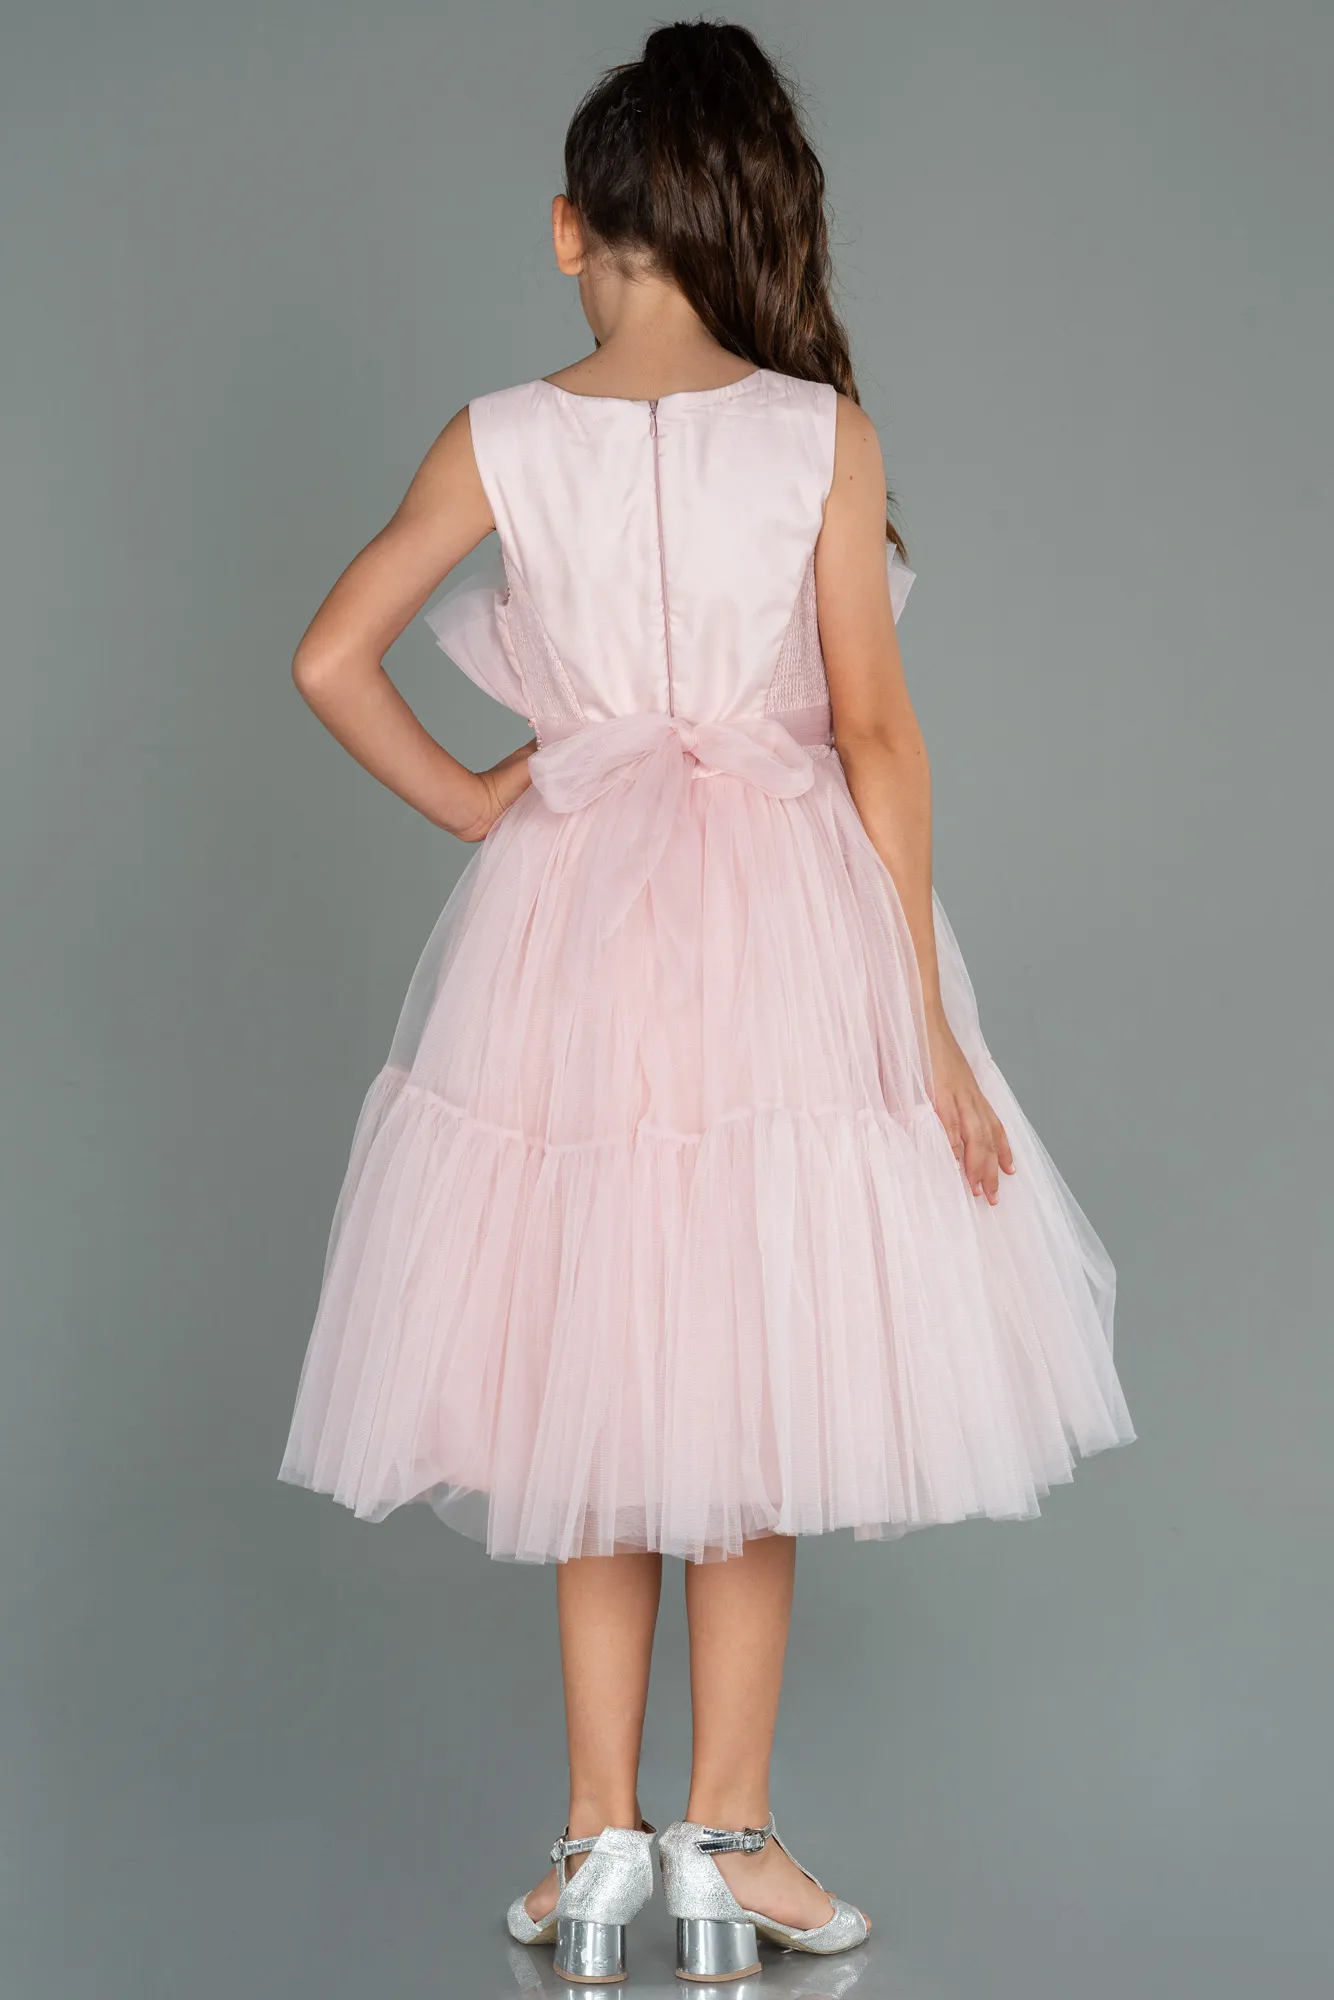 Powder Color-Short Girl Dress ABK1767